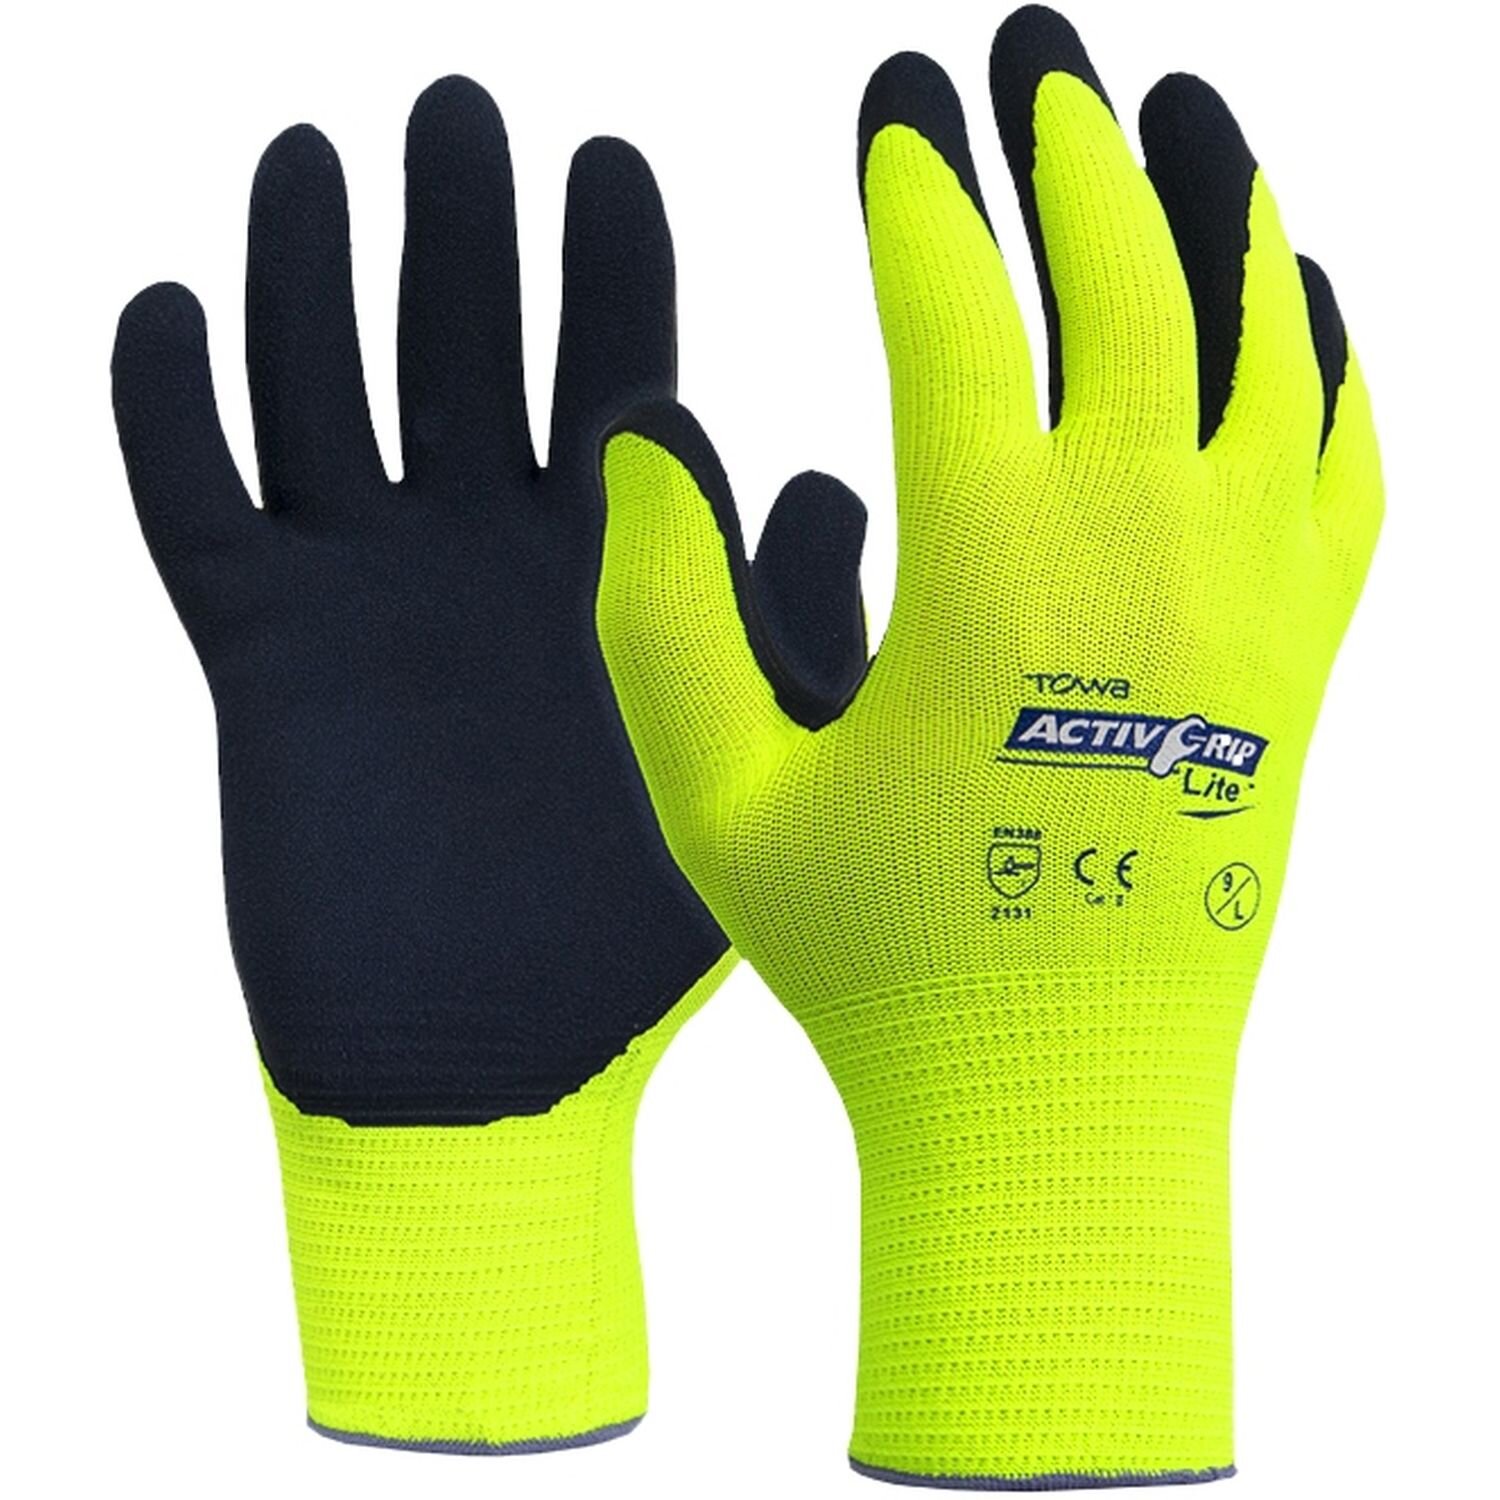 Towa ActivGrip Lite Glove Navy/Yellow (Pkt 12)